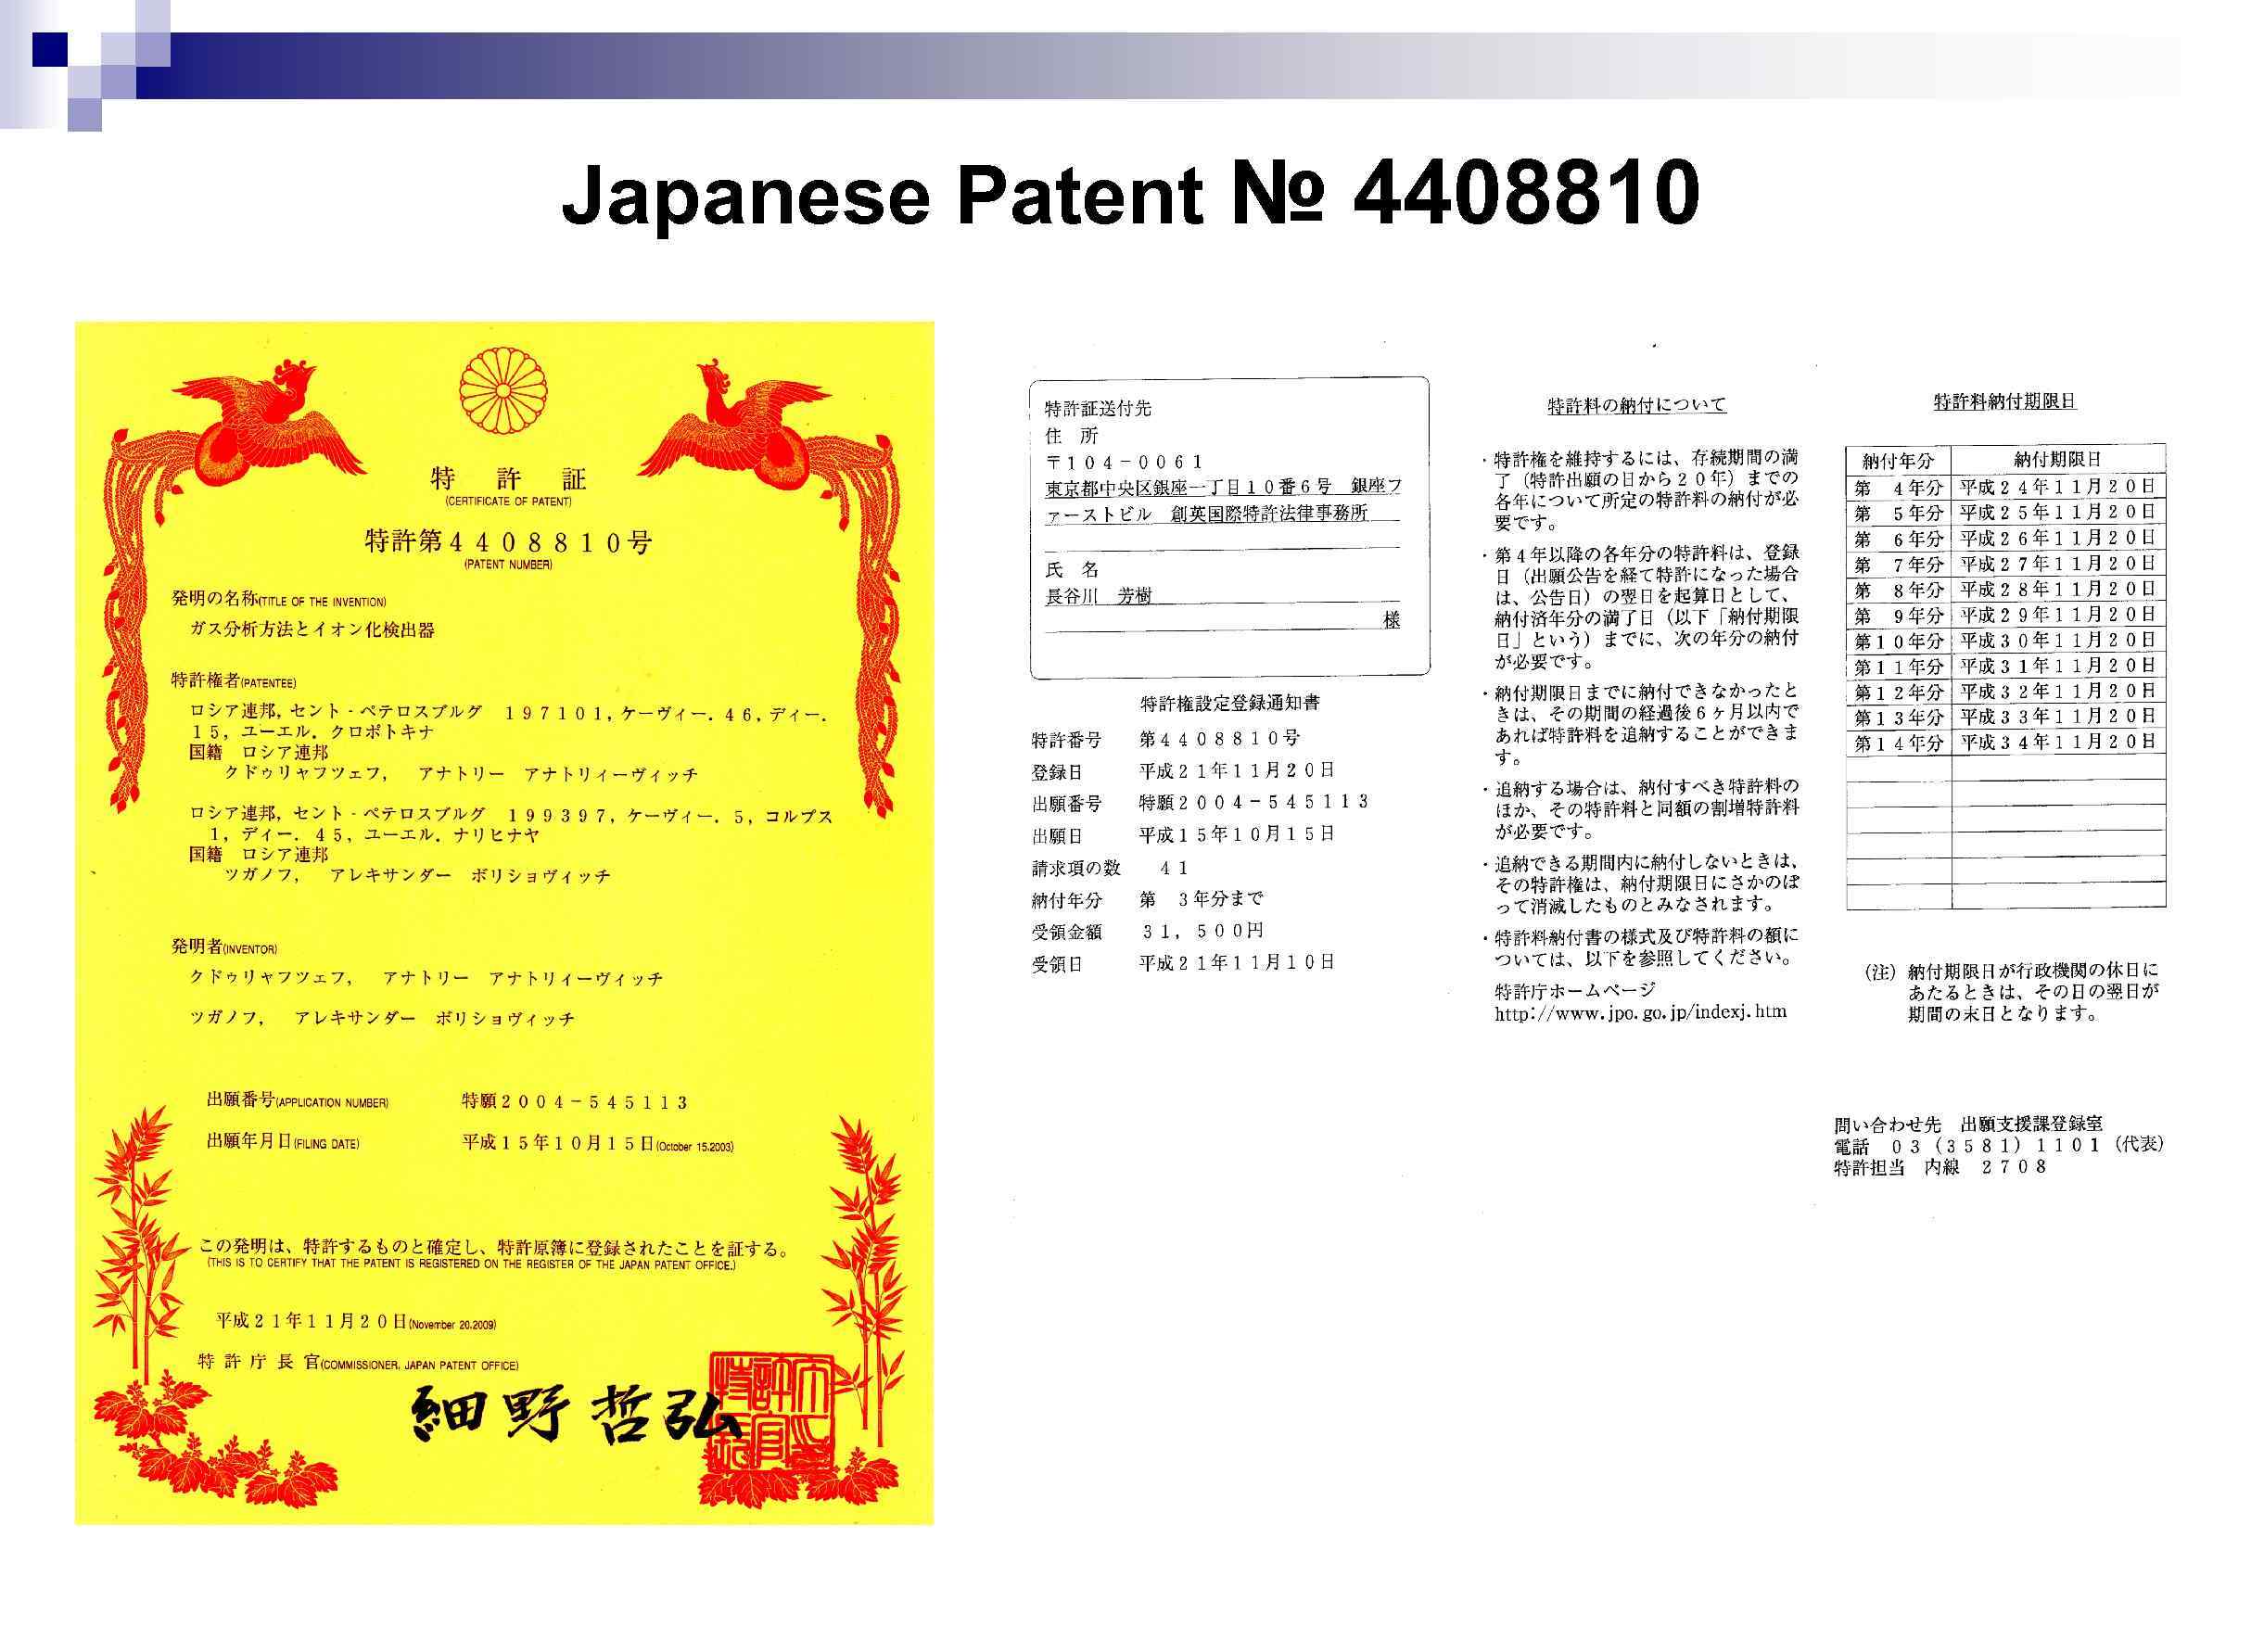 Japanese Patent № 4408810 